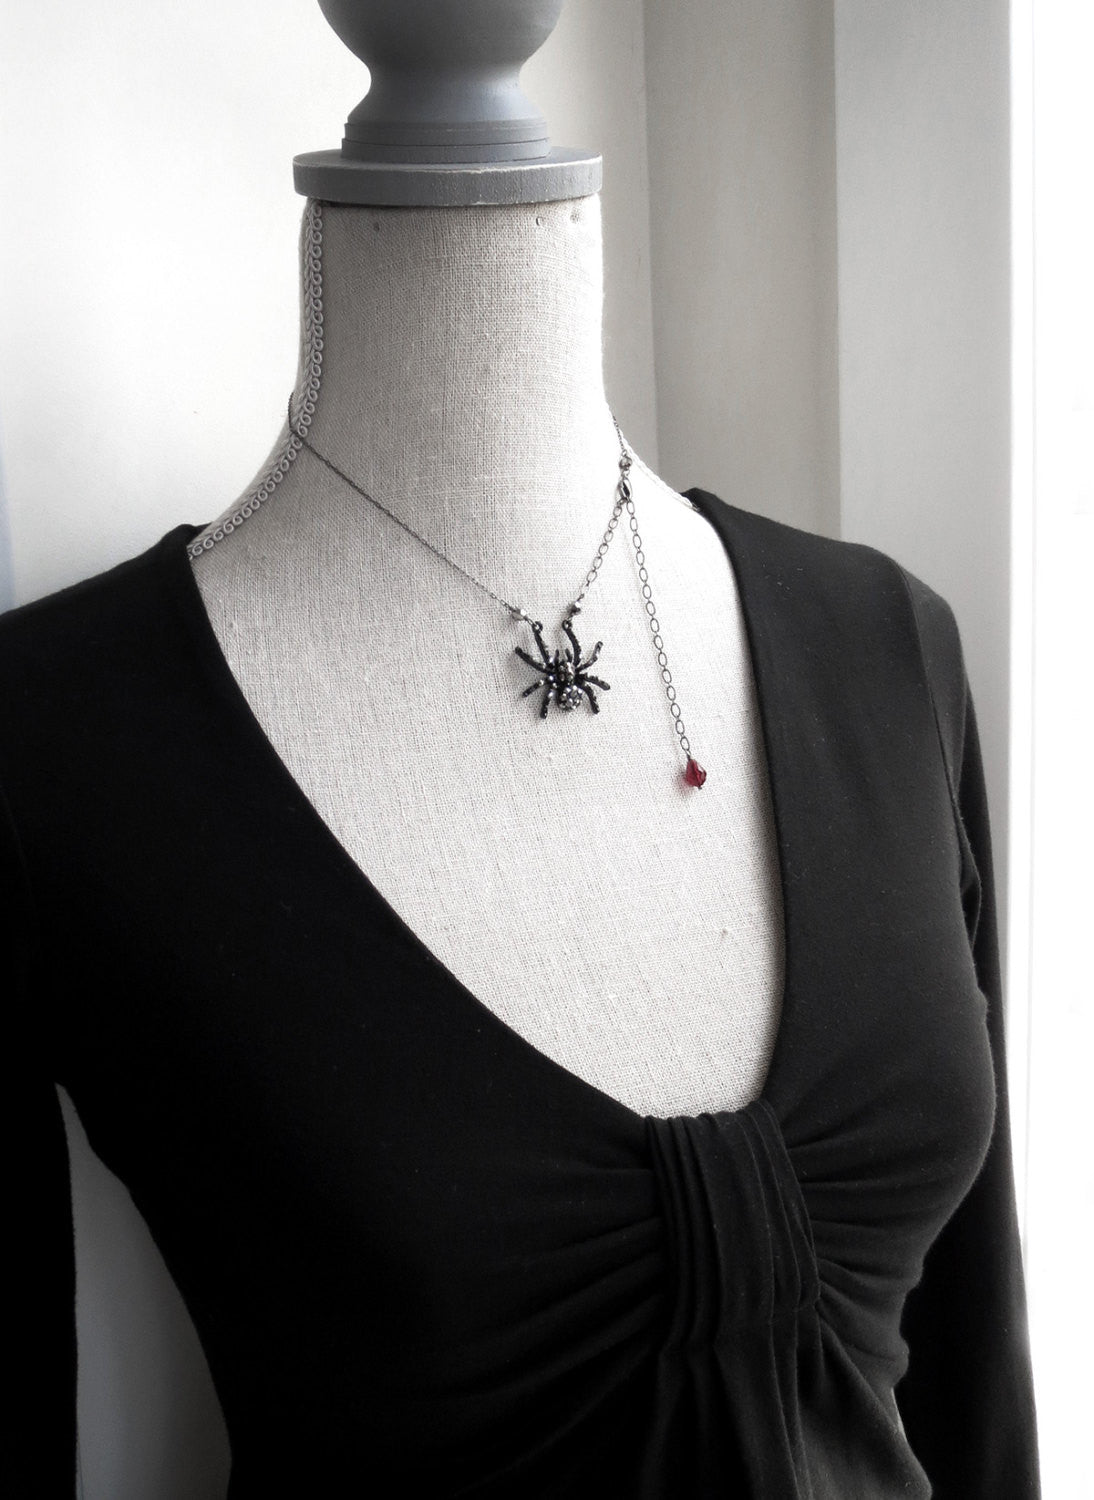 Amazon.com: Black Widow Spider Pendant Necklace : עבודת יד